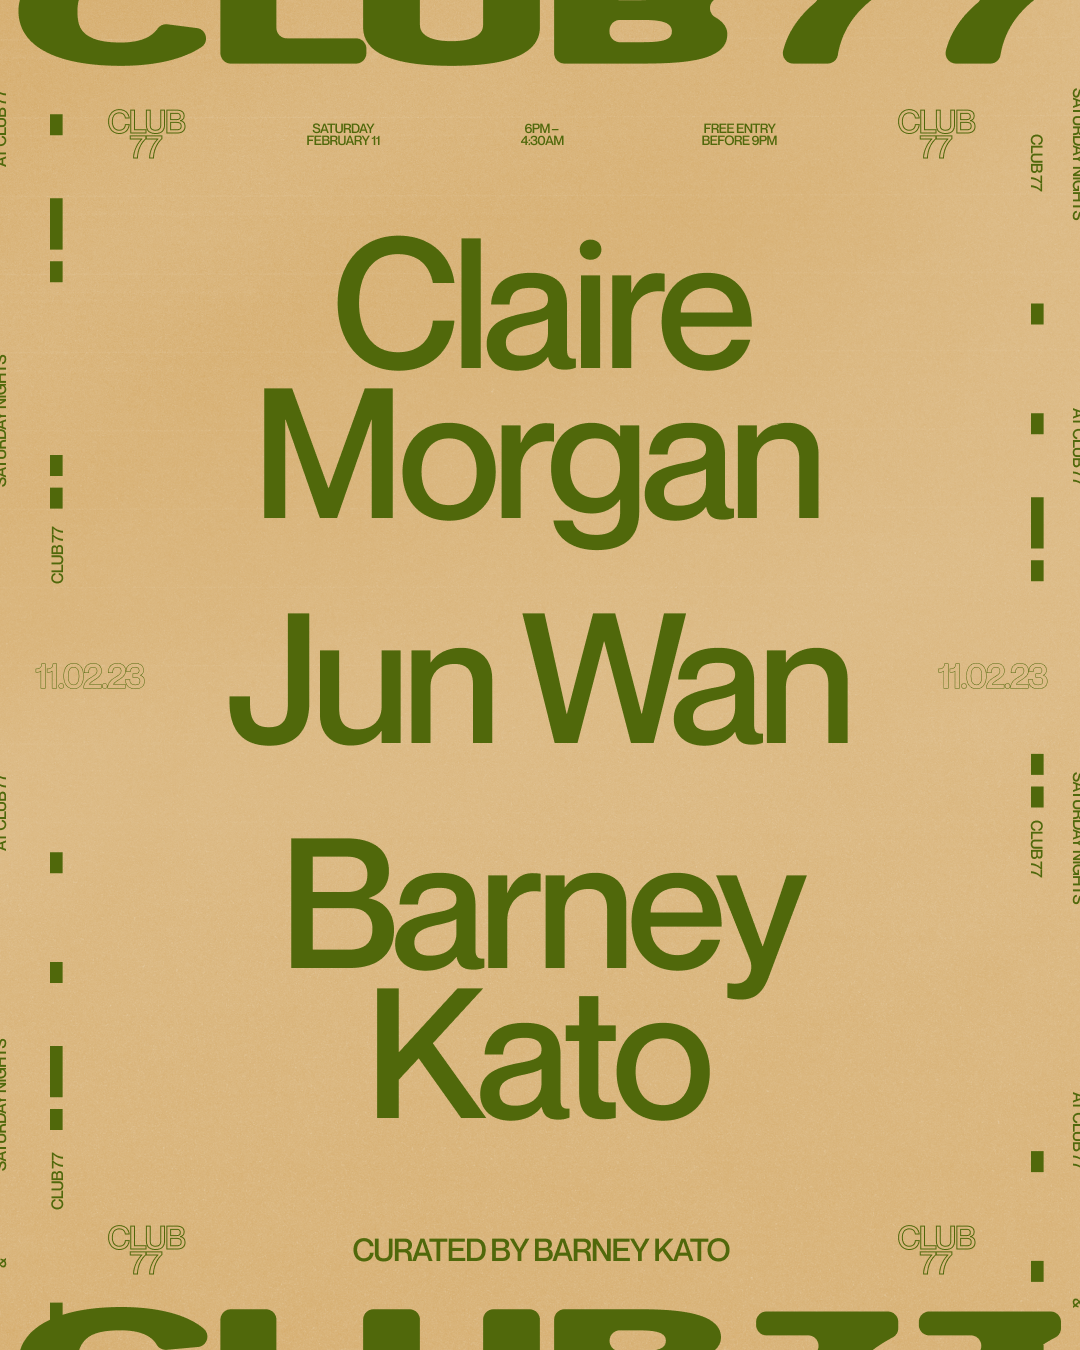 Club 77: Claire Morgan, Jun Wan & Barney Kato - フライヤー表